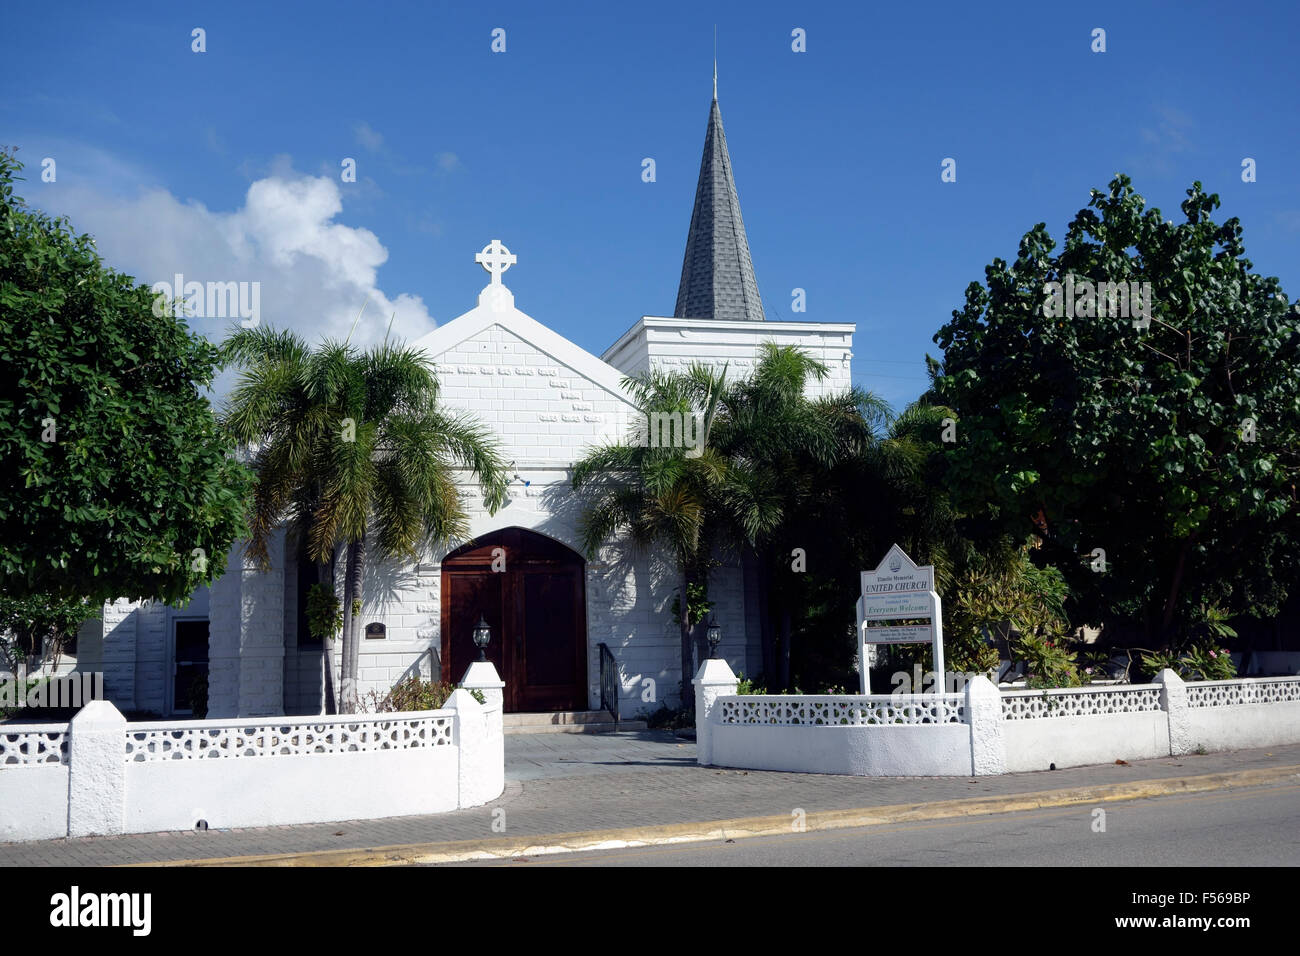 Elmslie Memorial United Church à George Town, Grand Cayman, Cayman Islands, Caribbean Banque D'Images